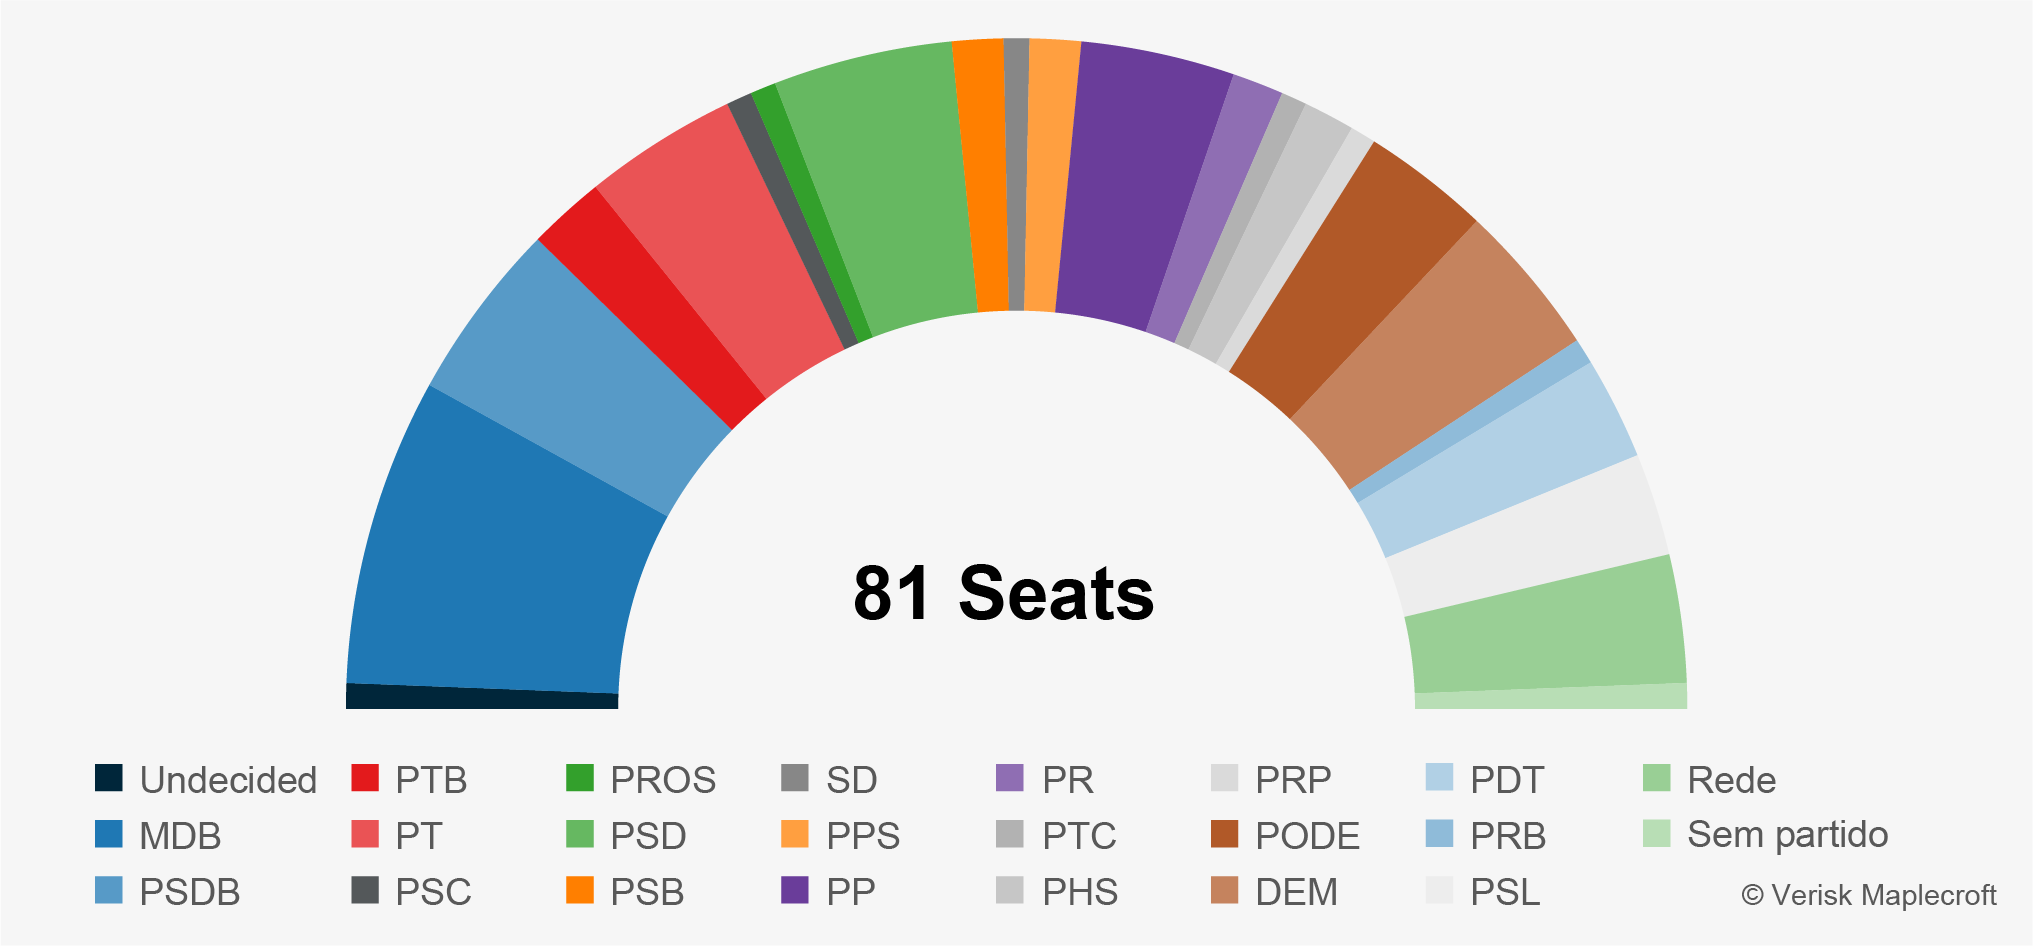 Political Landscape In Brazil: Composition Of The Senate, 2019